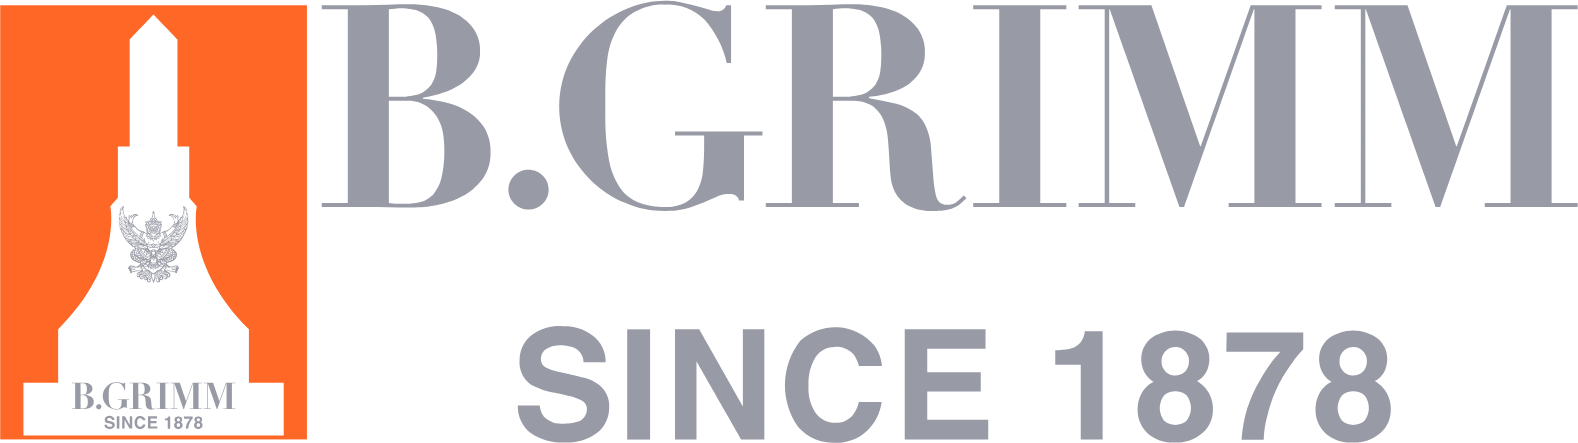 B.Grimm Power logo large (transparent PNG)